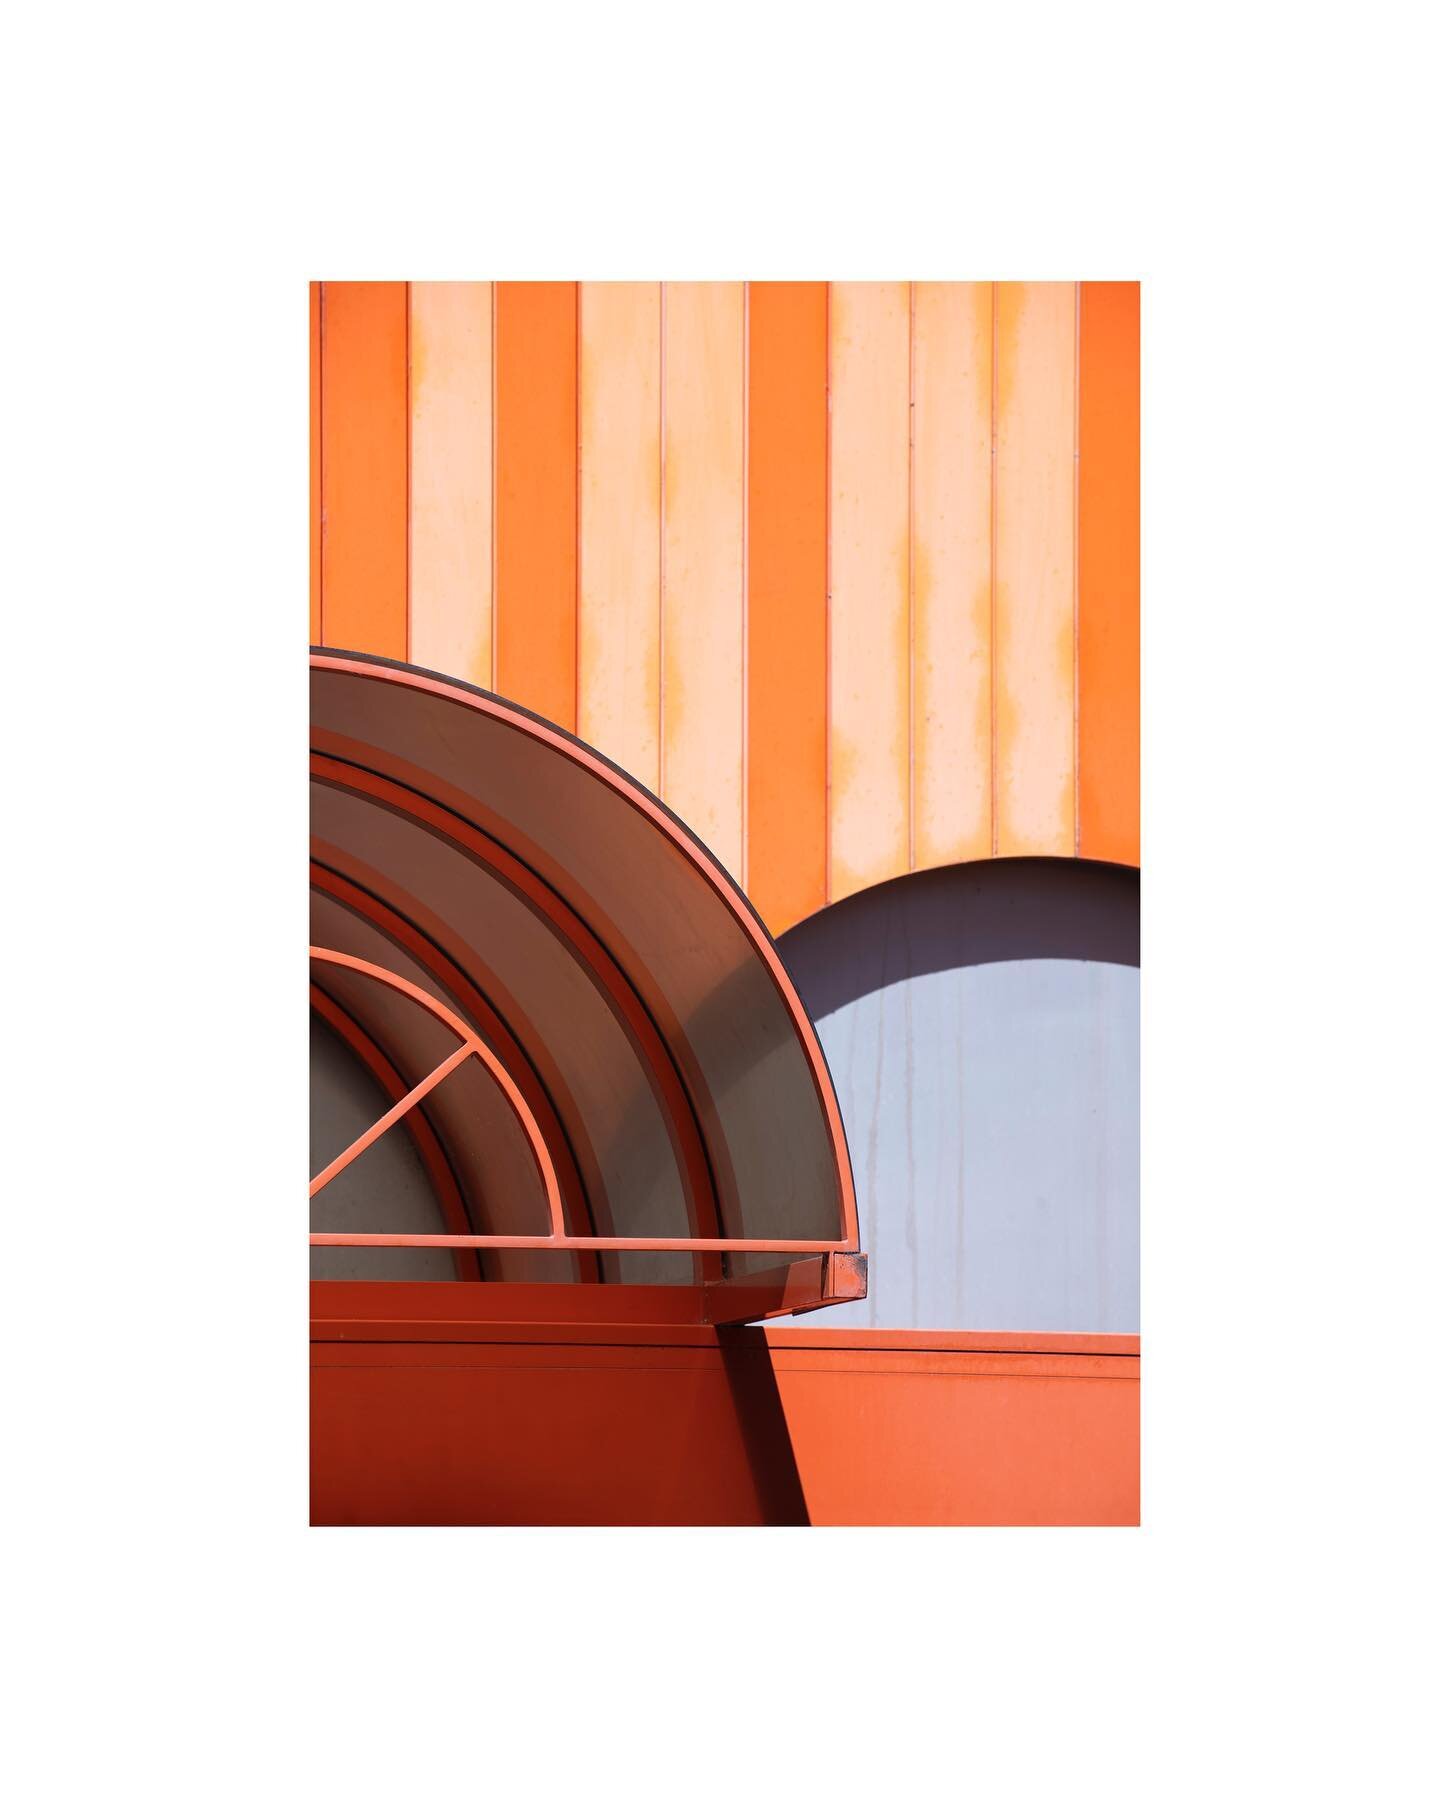 Archi Series 🏢- Place Chauderon 11, 1003 Lausanne.
#orange #minimal #minimalist #minimal_perfection #minimalism #minimalove #abstractartist #abstractphotography #archilovers #architecturephotography #fineart #fineartphotography #minimal_lookup #mini